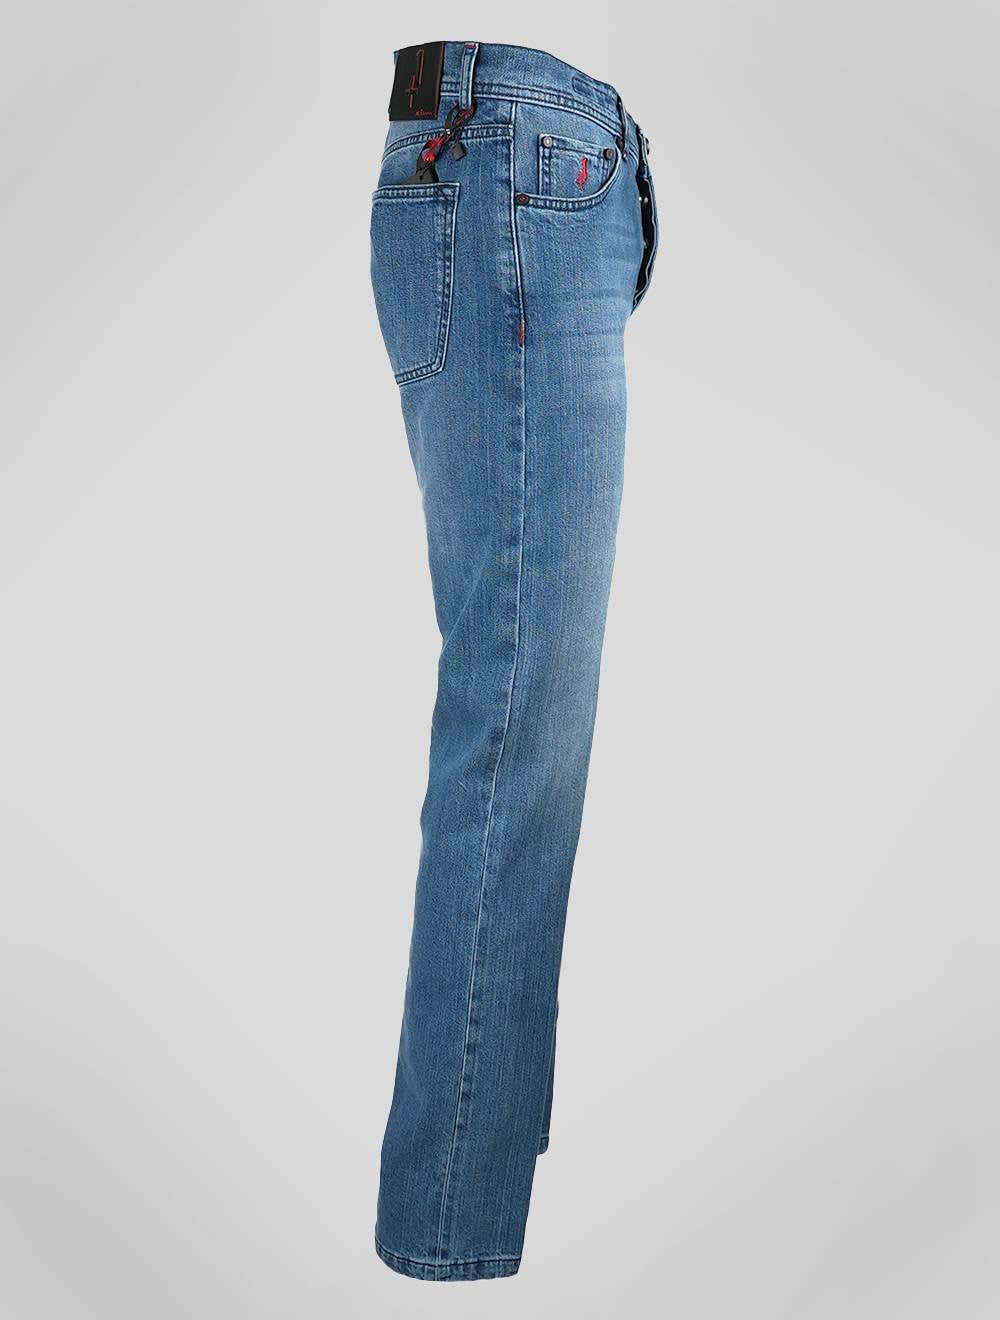 Kiton lichtblauwe katoenen Ea Jeans speciale editie